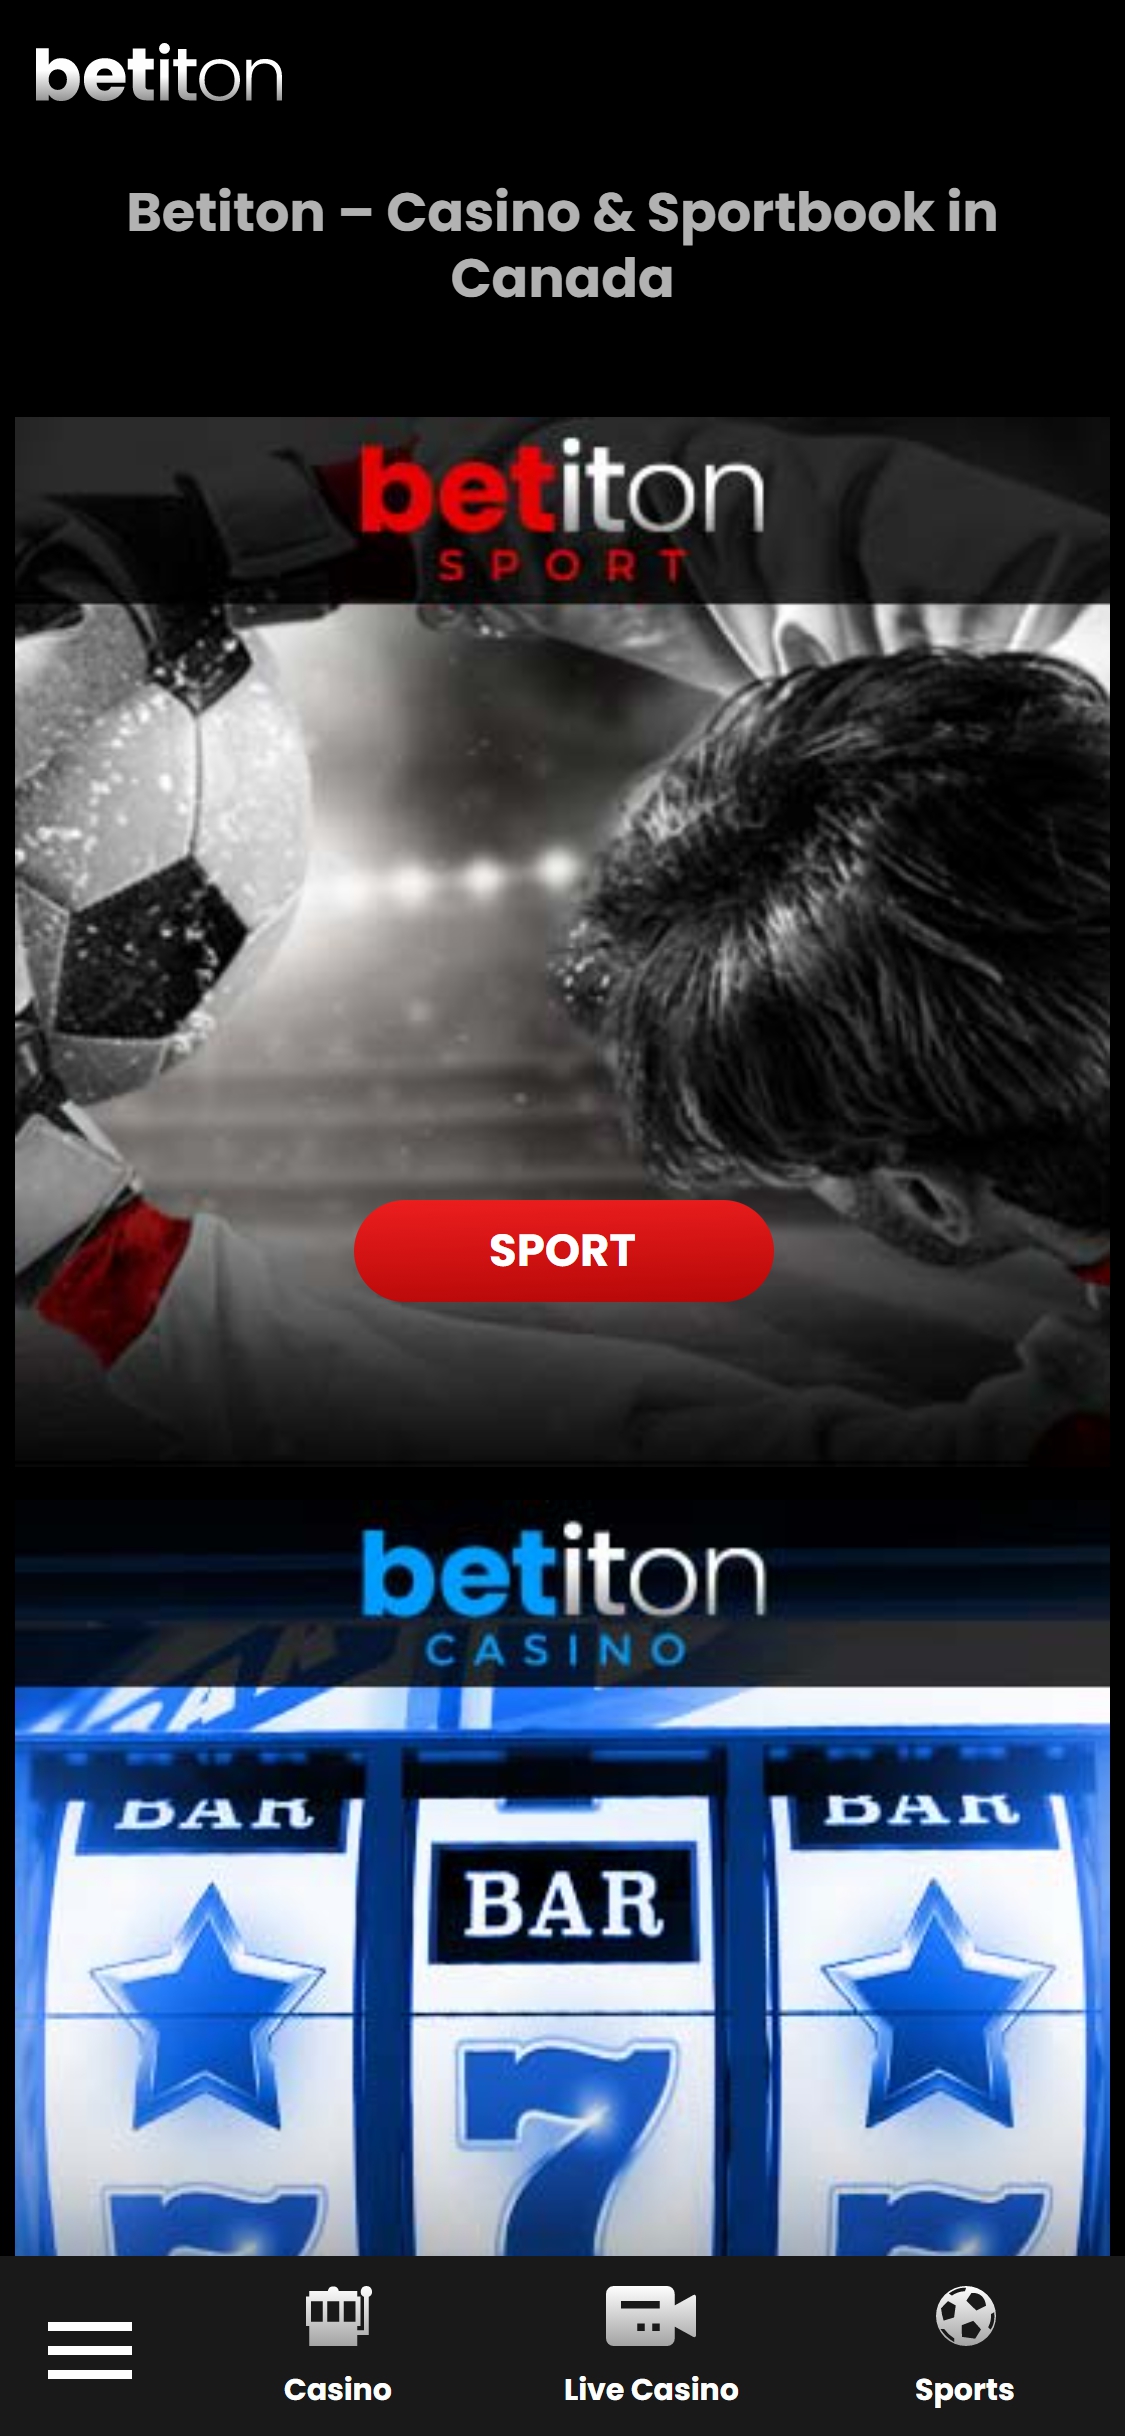 Betiton Casino Mobile Review